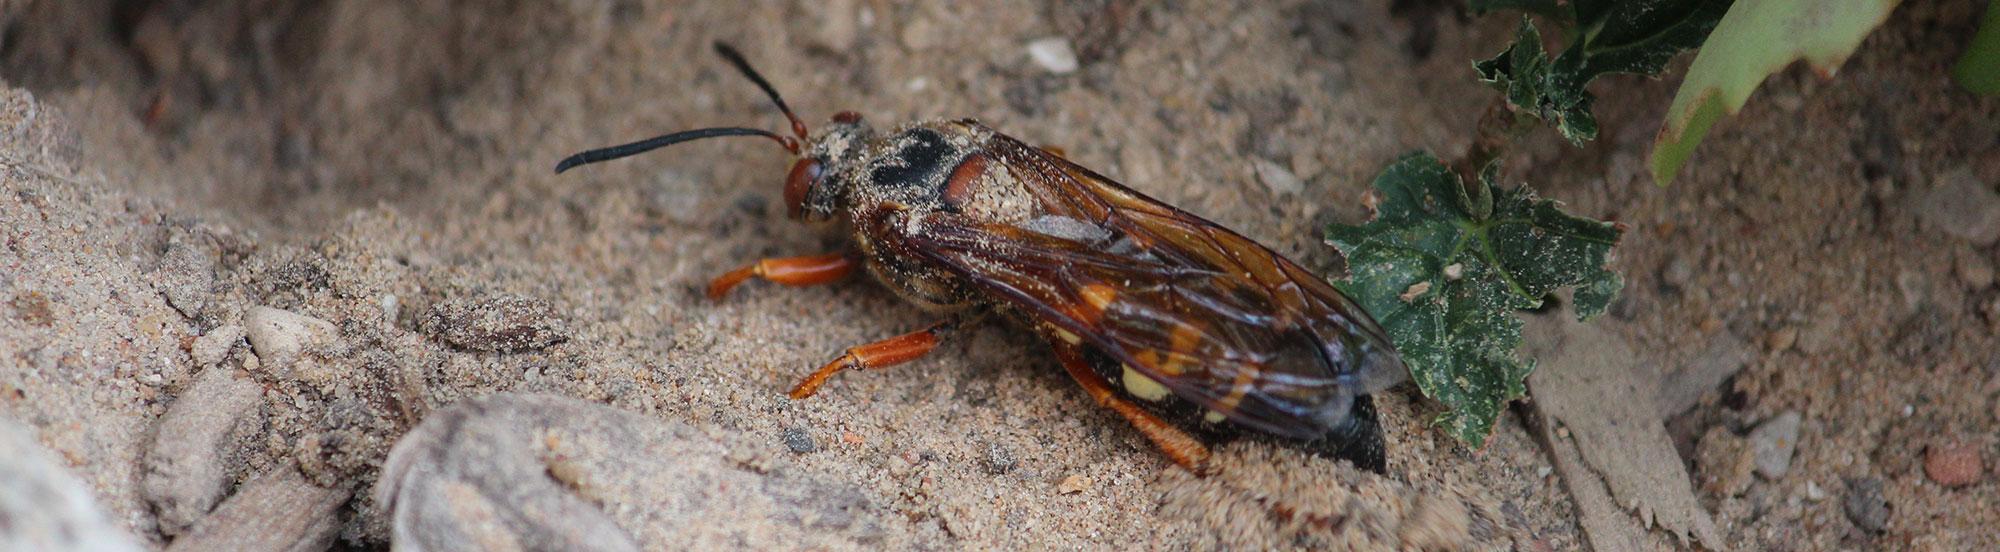 cicada killer wasp searching for cicada